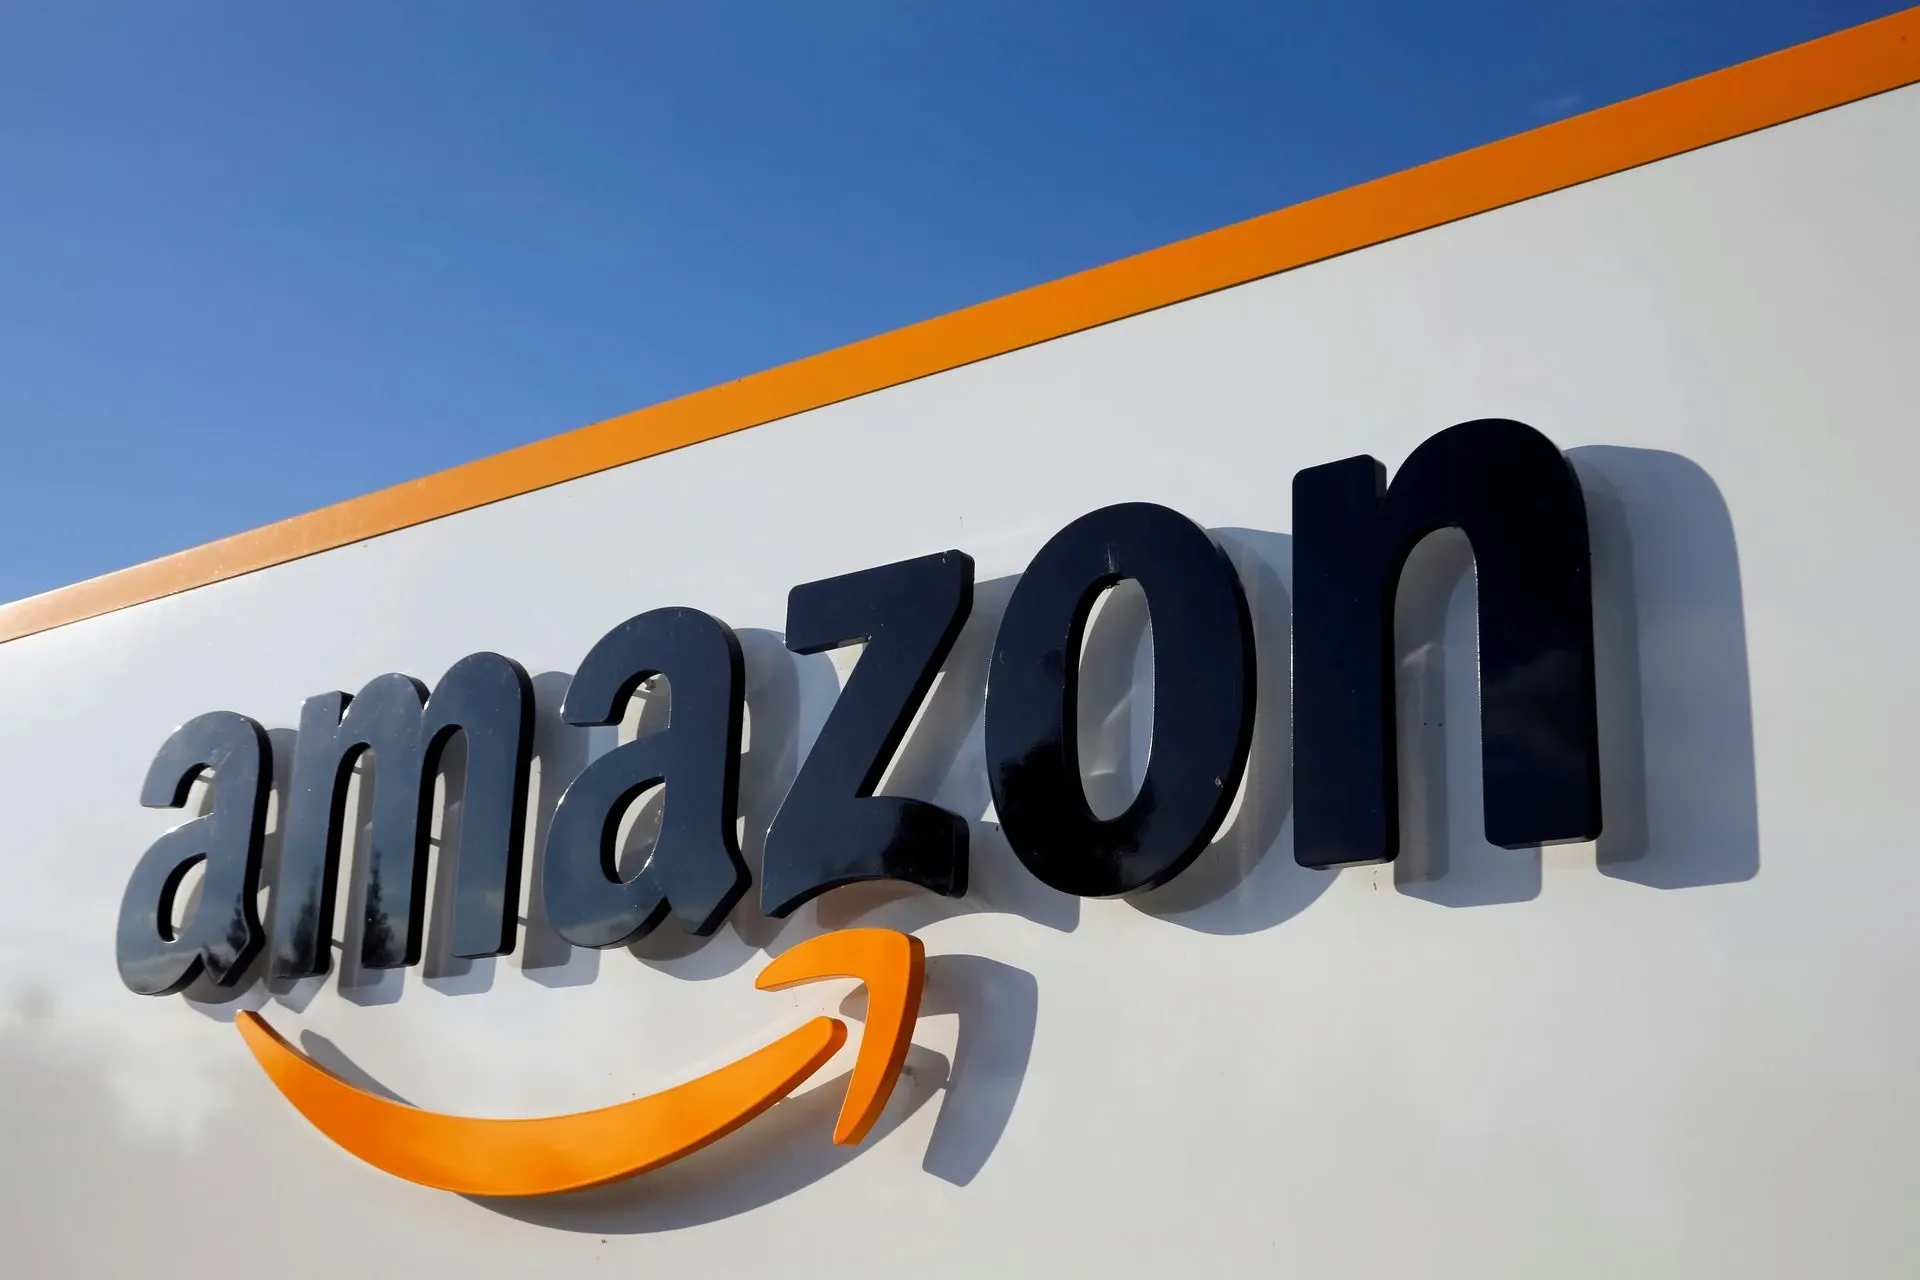  Сделка между Amazon и Apple приводит к росту цен в Испании